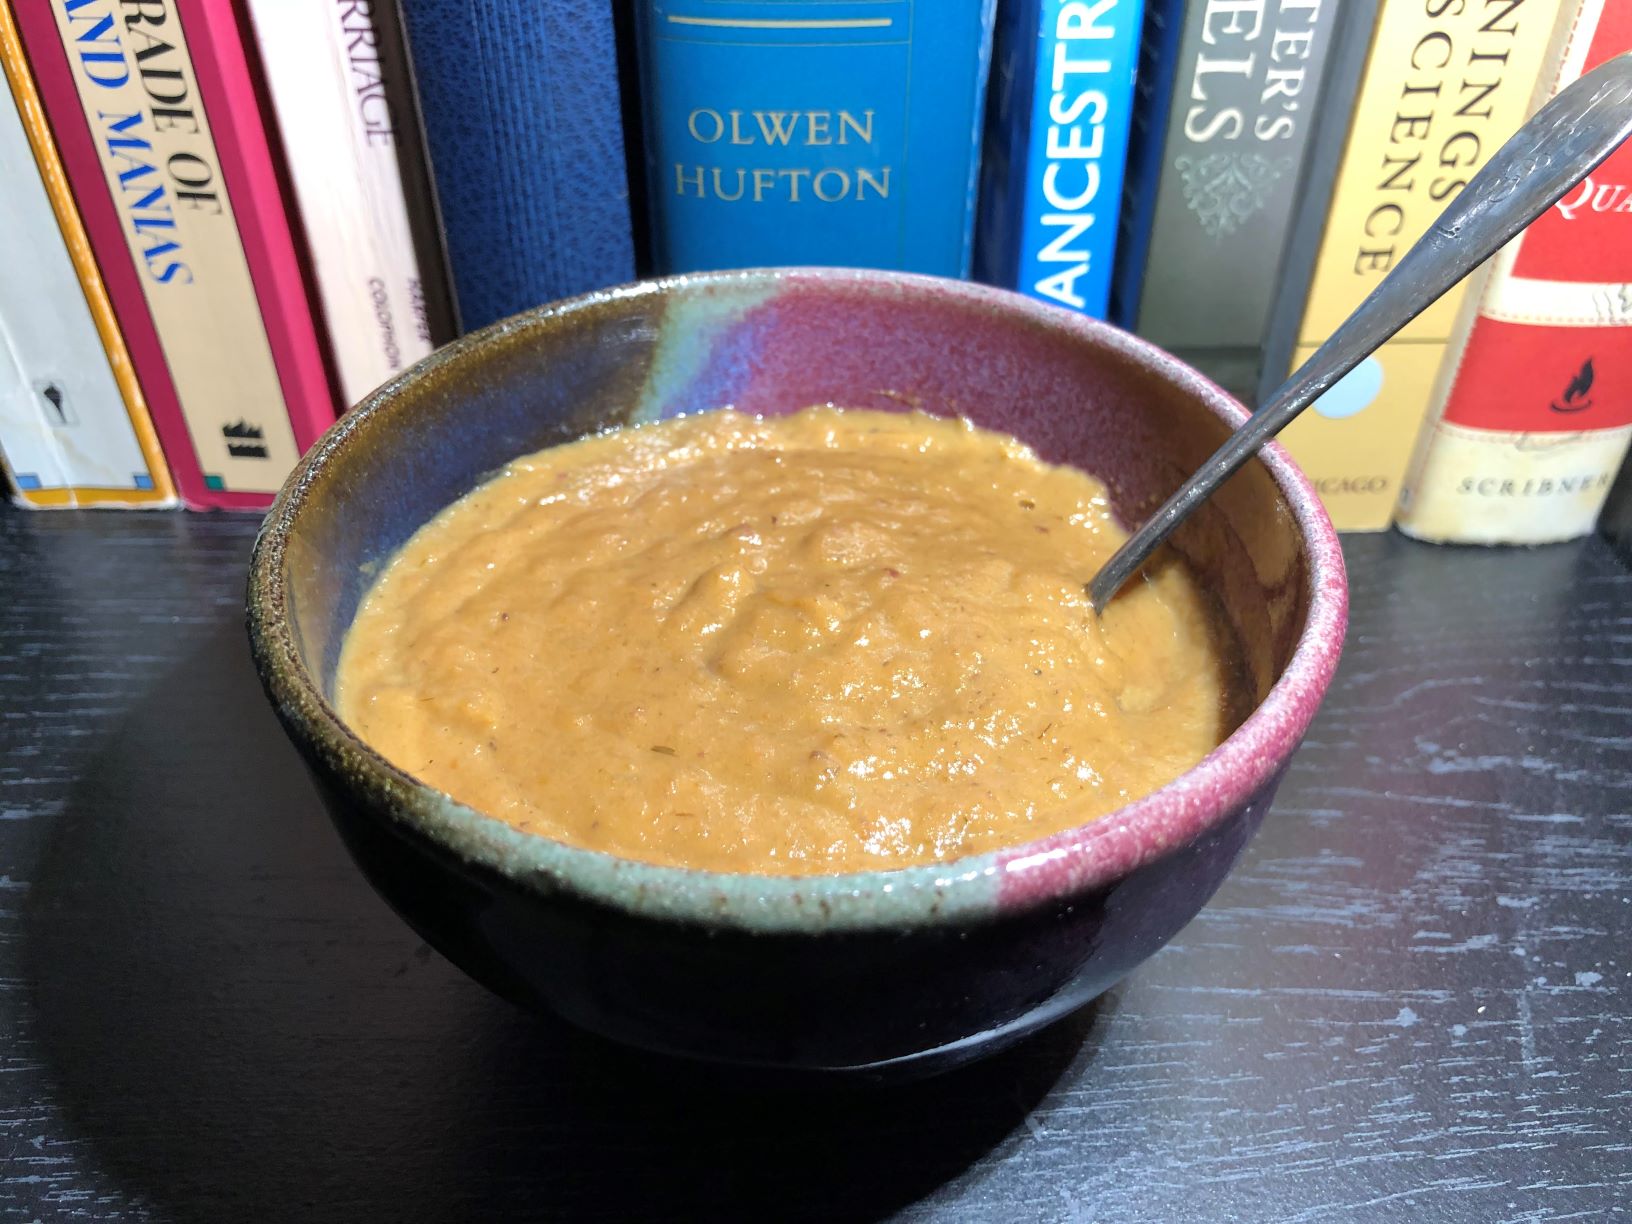 A bowl of thick tan/brown soup.